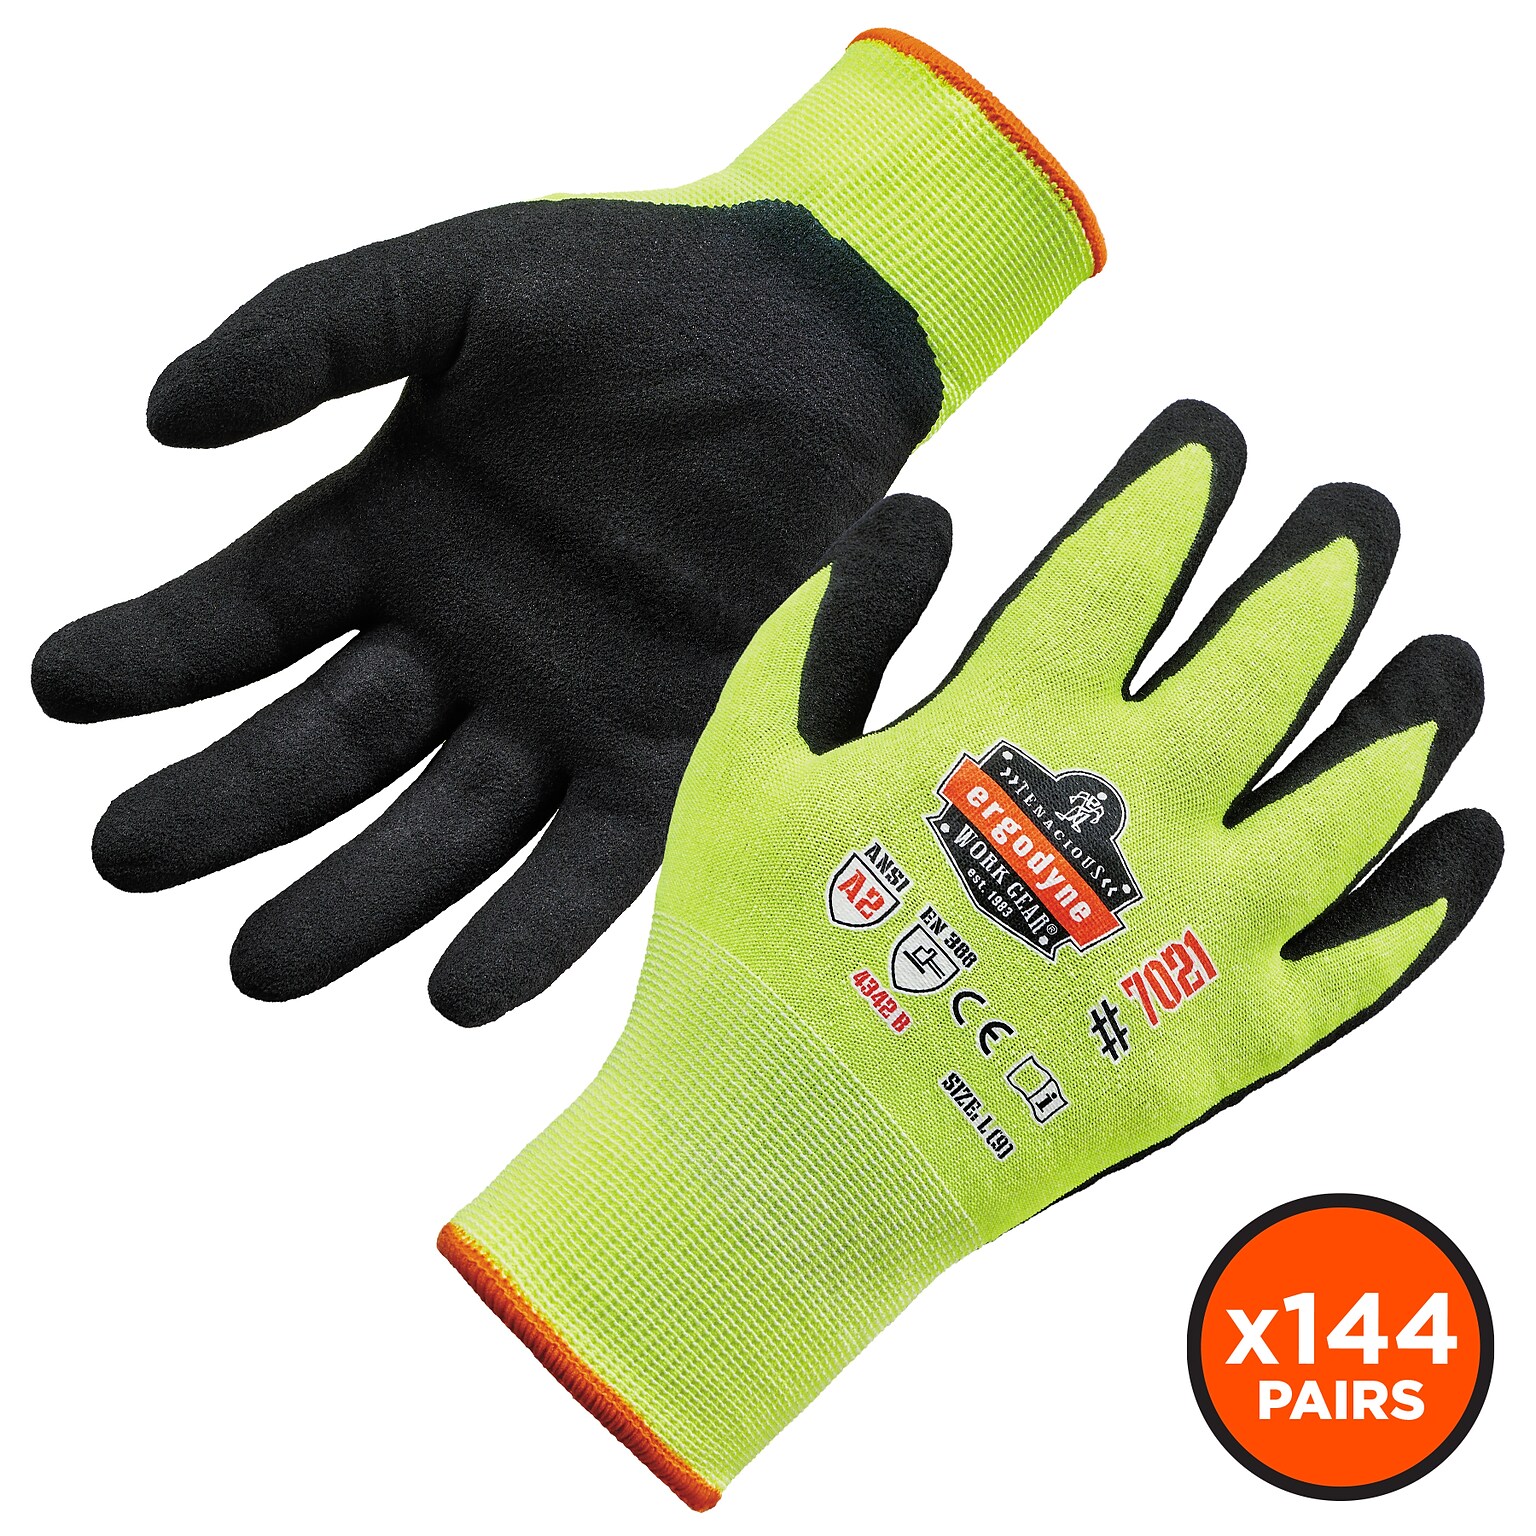 Ergodyne ProFlex 7021 Hi-Vis Nitrile Coated Cut-Resistant Gloves, ANSI A2, Wet Grip, Lime, XL, 144 Pairs (17965)